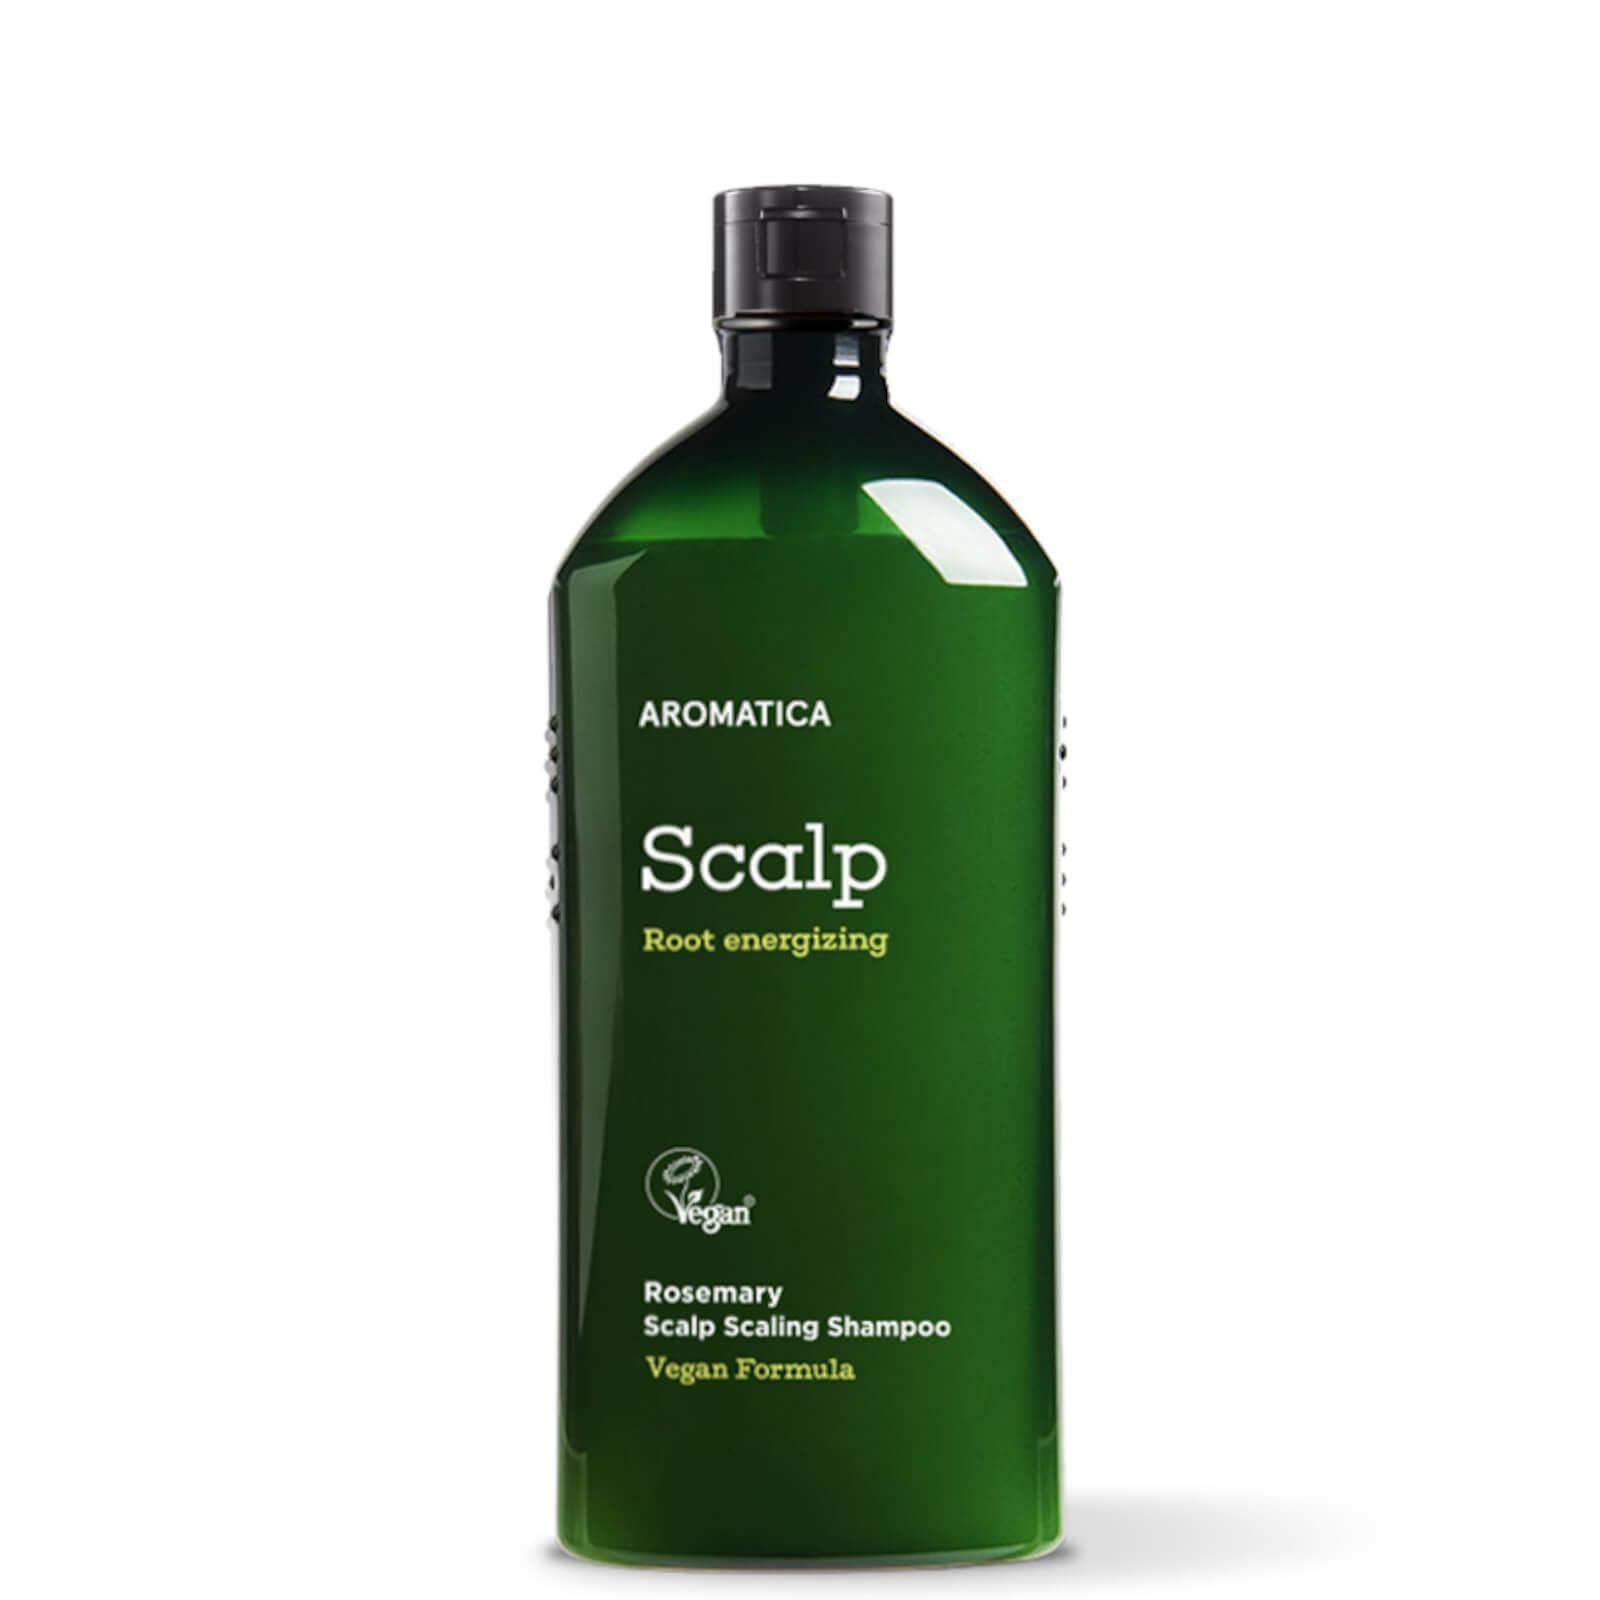 Image of AROMATICA Rosemary Scalp Scaling Shampoo 400ml